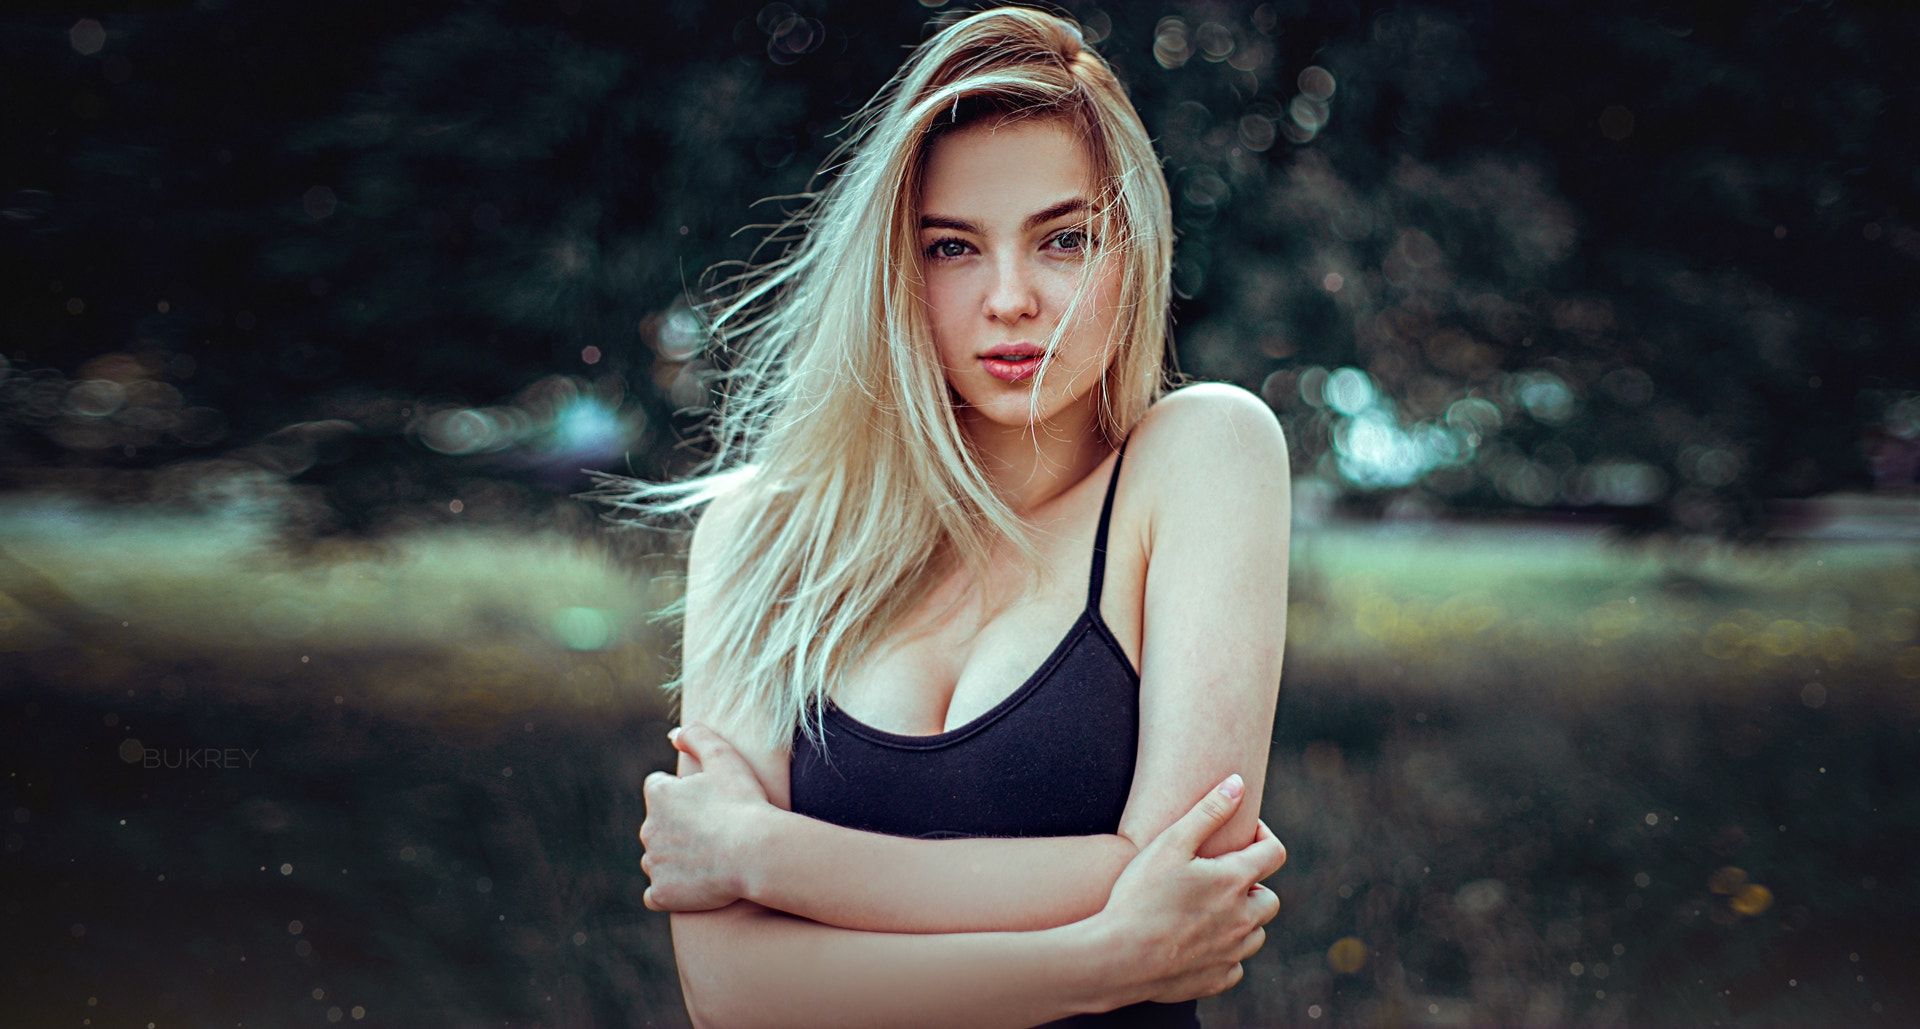 Wallpaper Hot model, crossed arm, outdoor, blonde